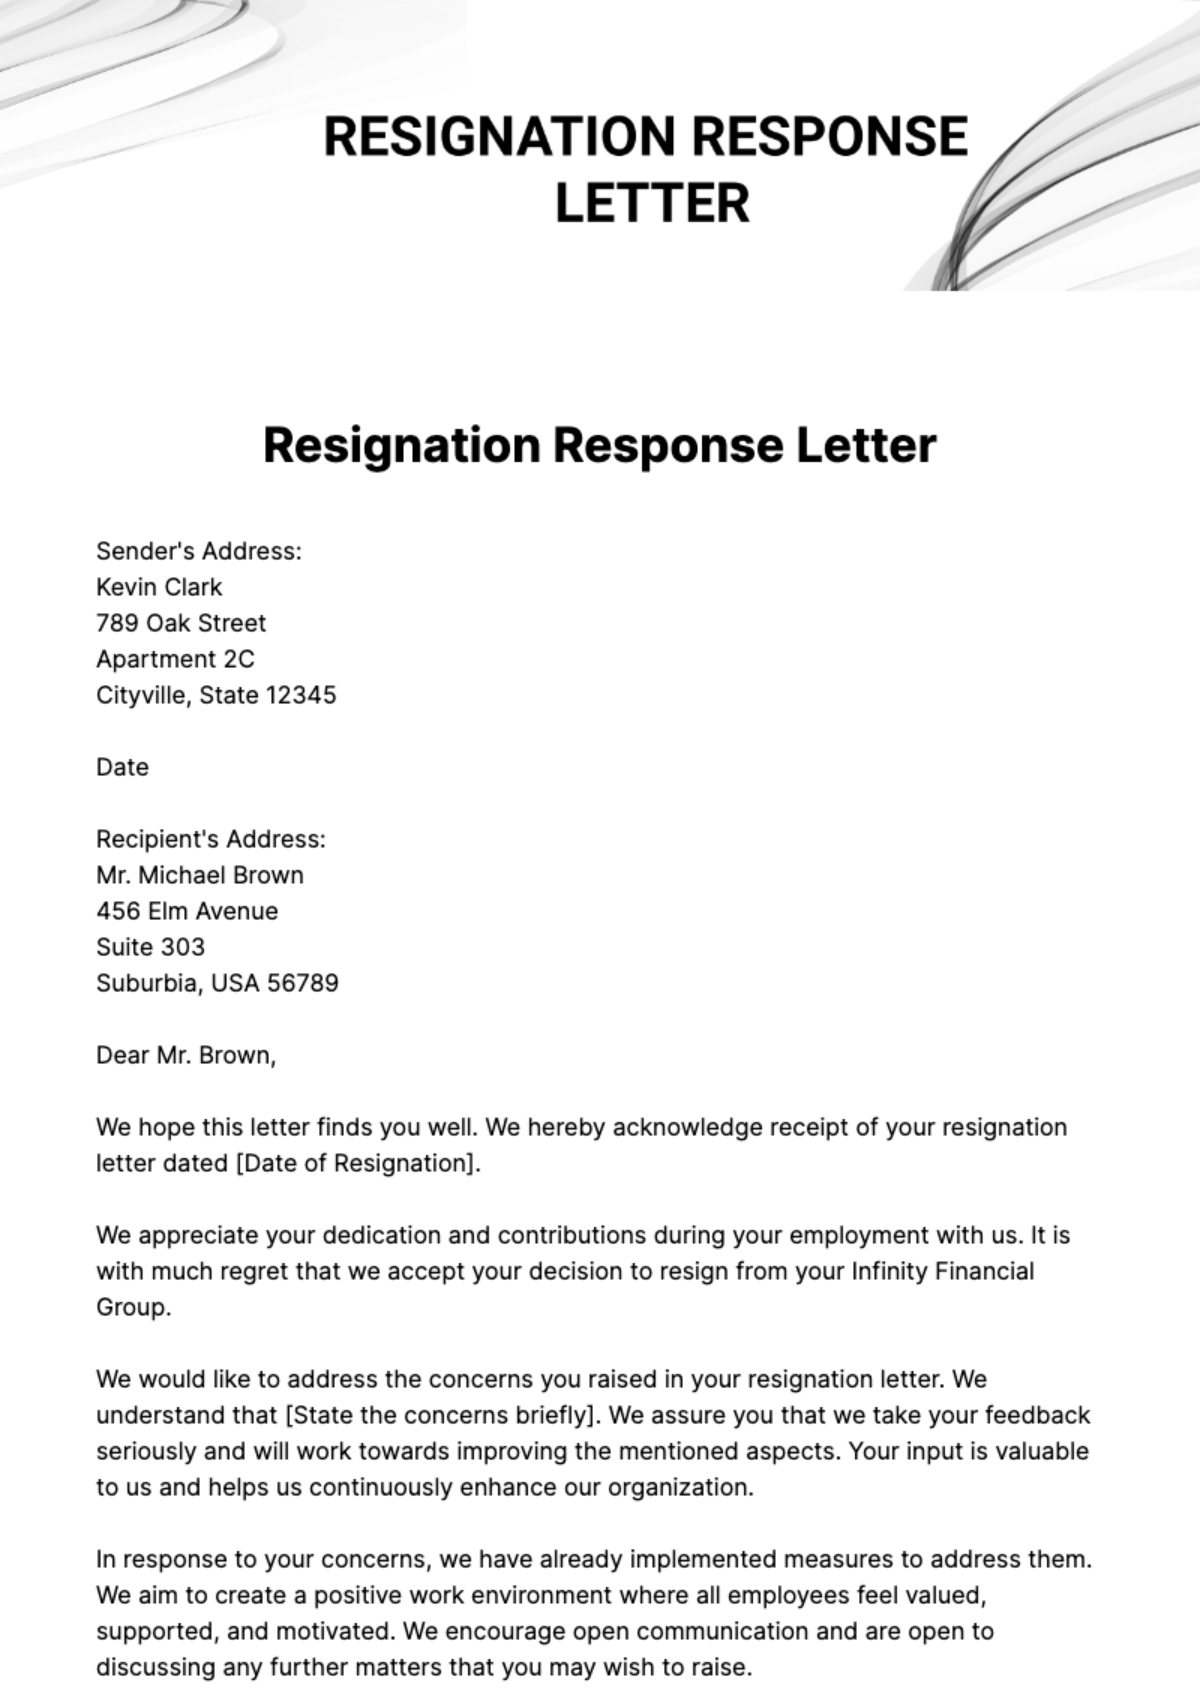 Free Resignation Response Letter Template